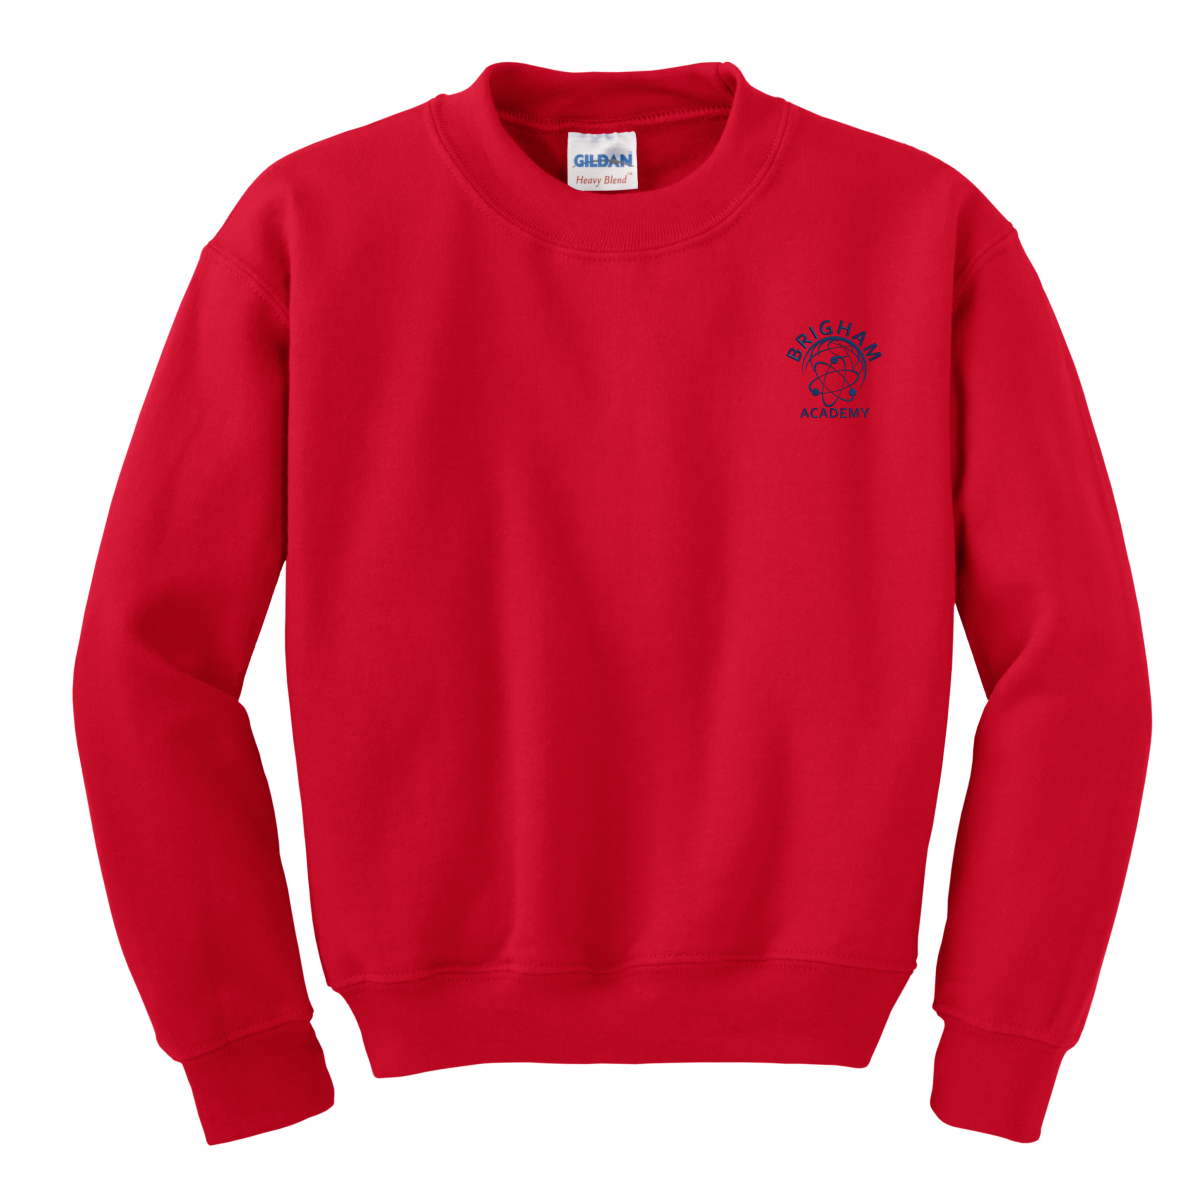 Brigham Academy Youth Heavy Blend Crewneck Sweatshirt - RED